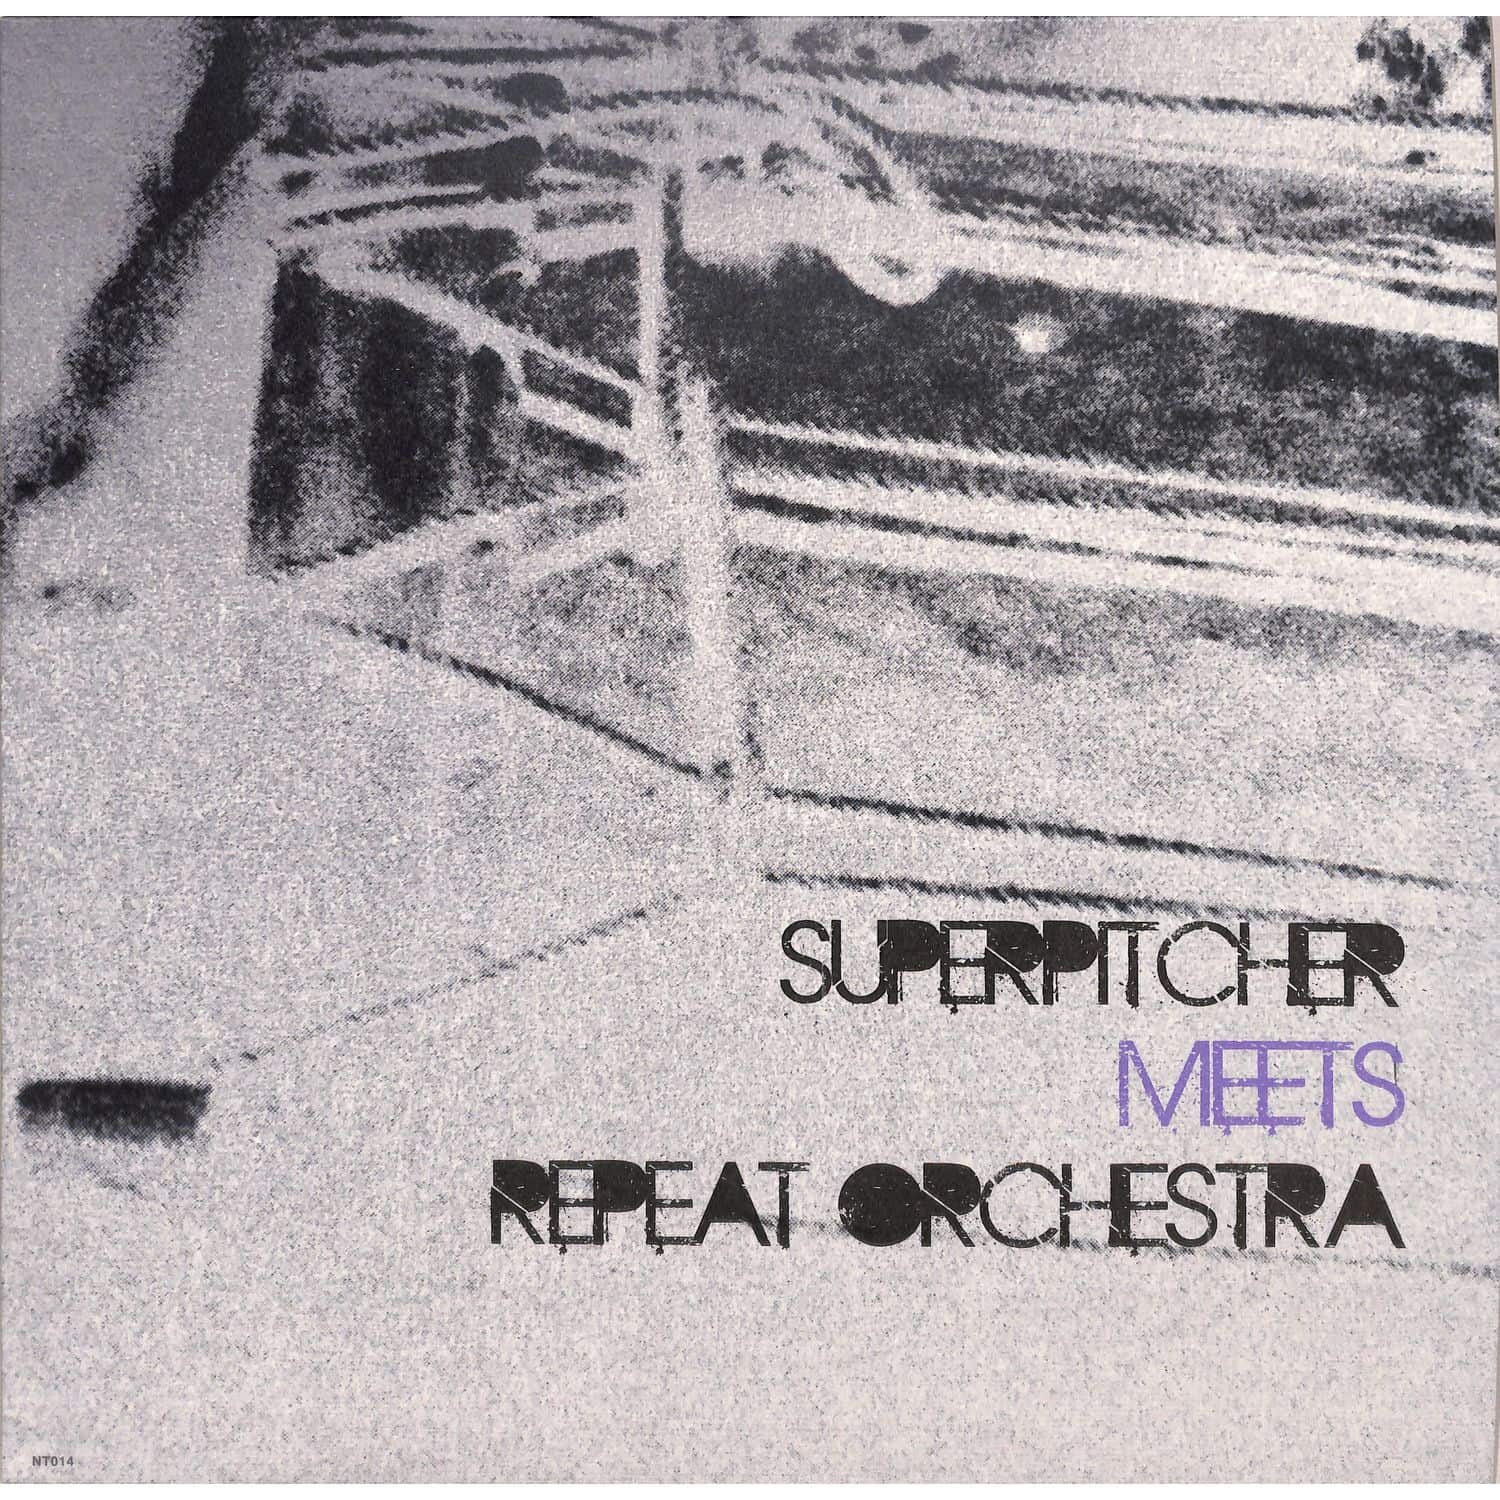 Superpitcher / Repeat Orchestra - SUPERPITCHER MEETS REPEAT ORCHESTRA